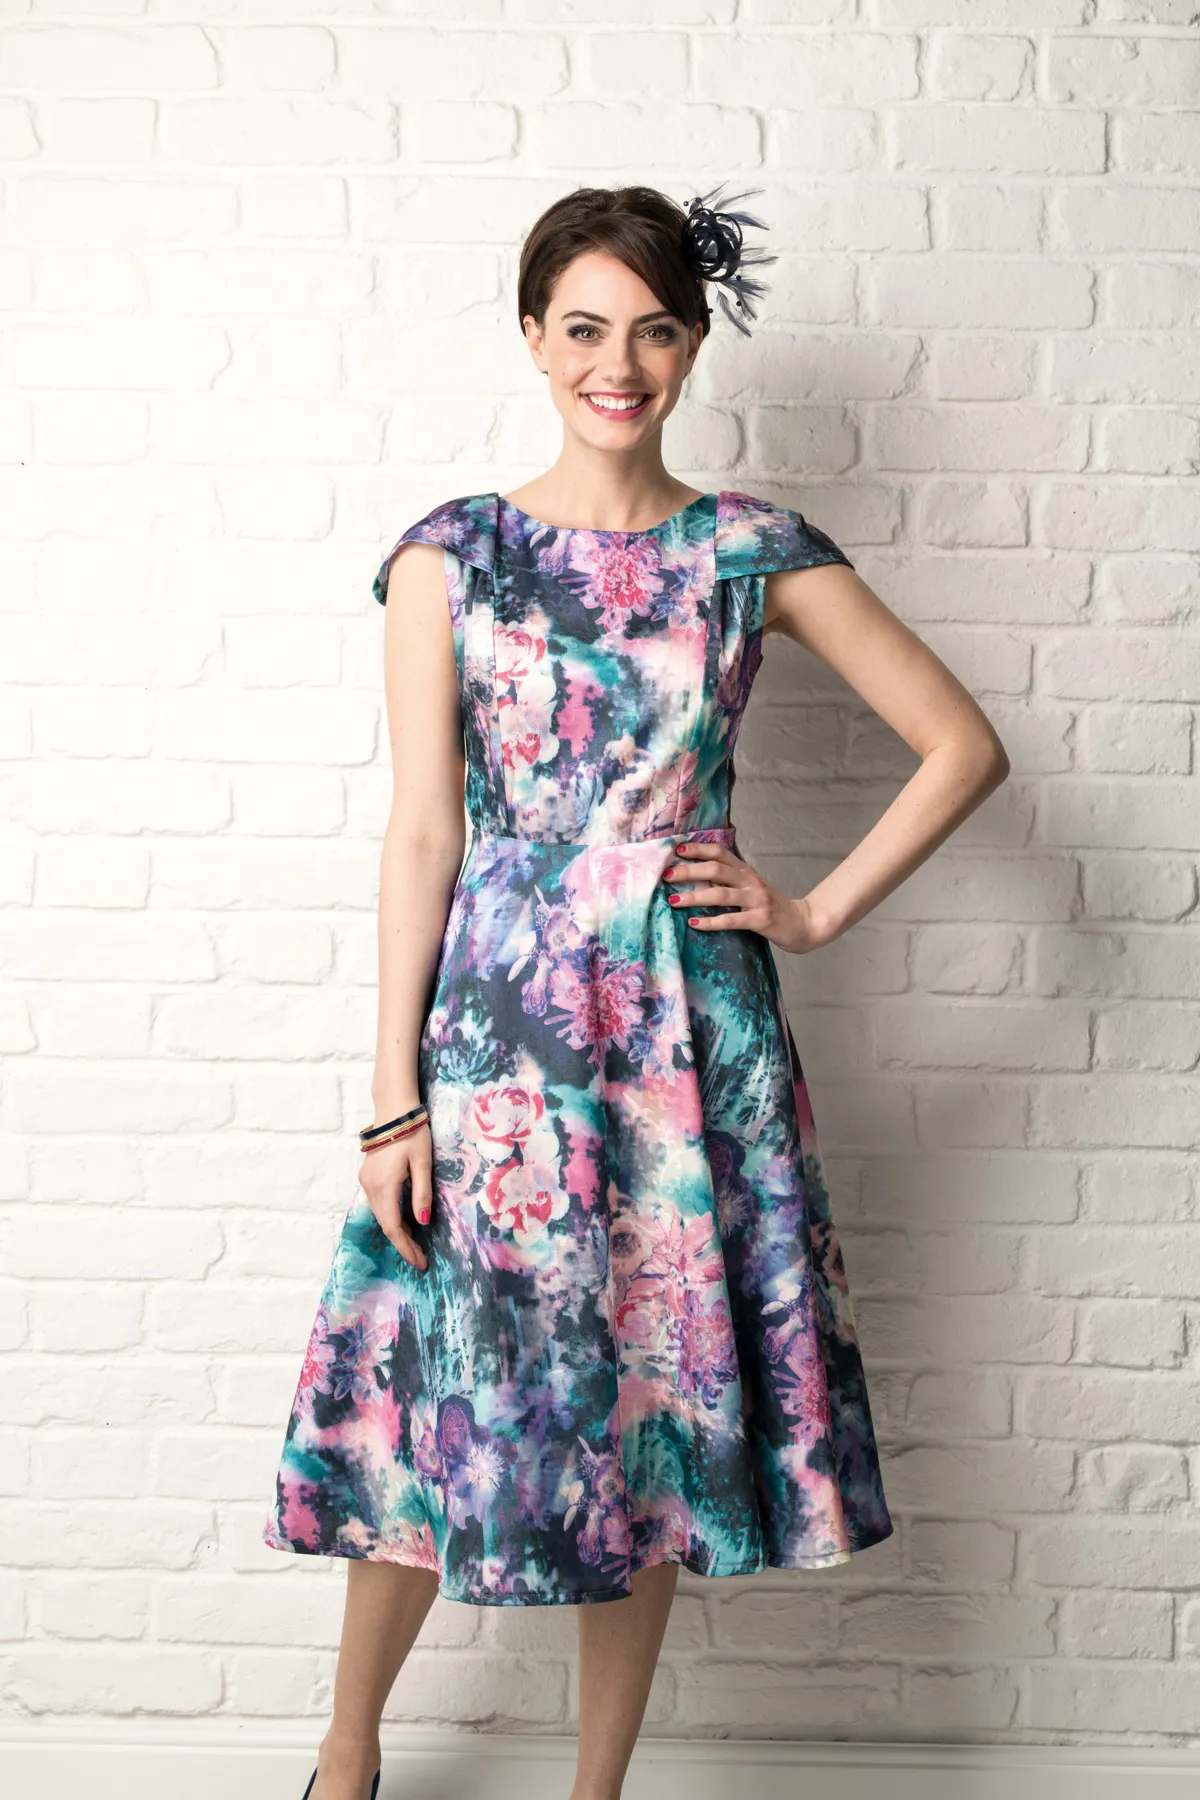 The Sophia Dress sewing pattern